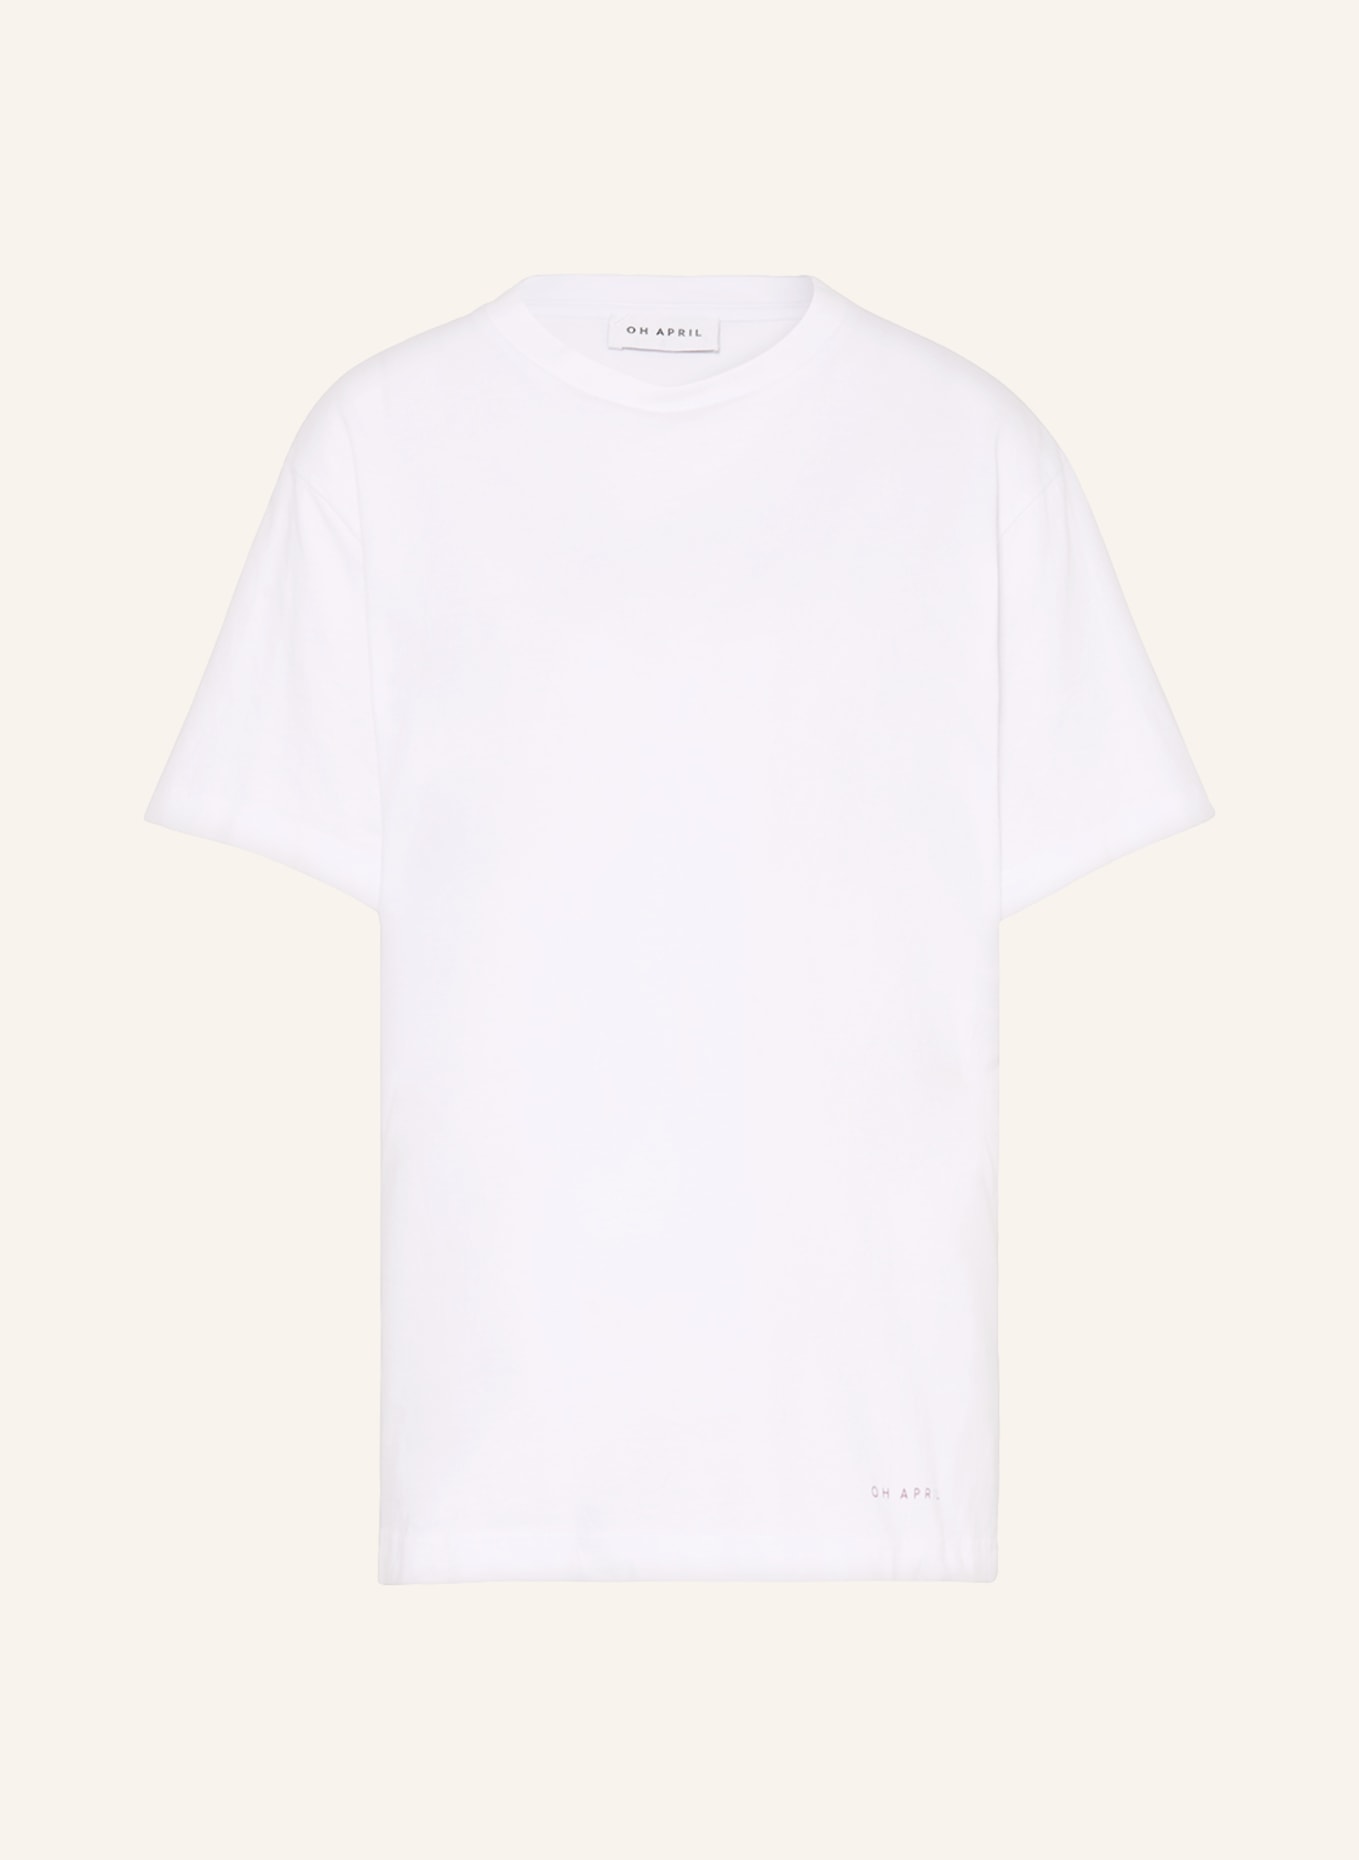 OH APRIL T-Shirt FIND JOY, Farbe: WEISS (Bild 1)